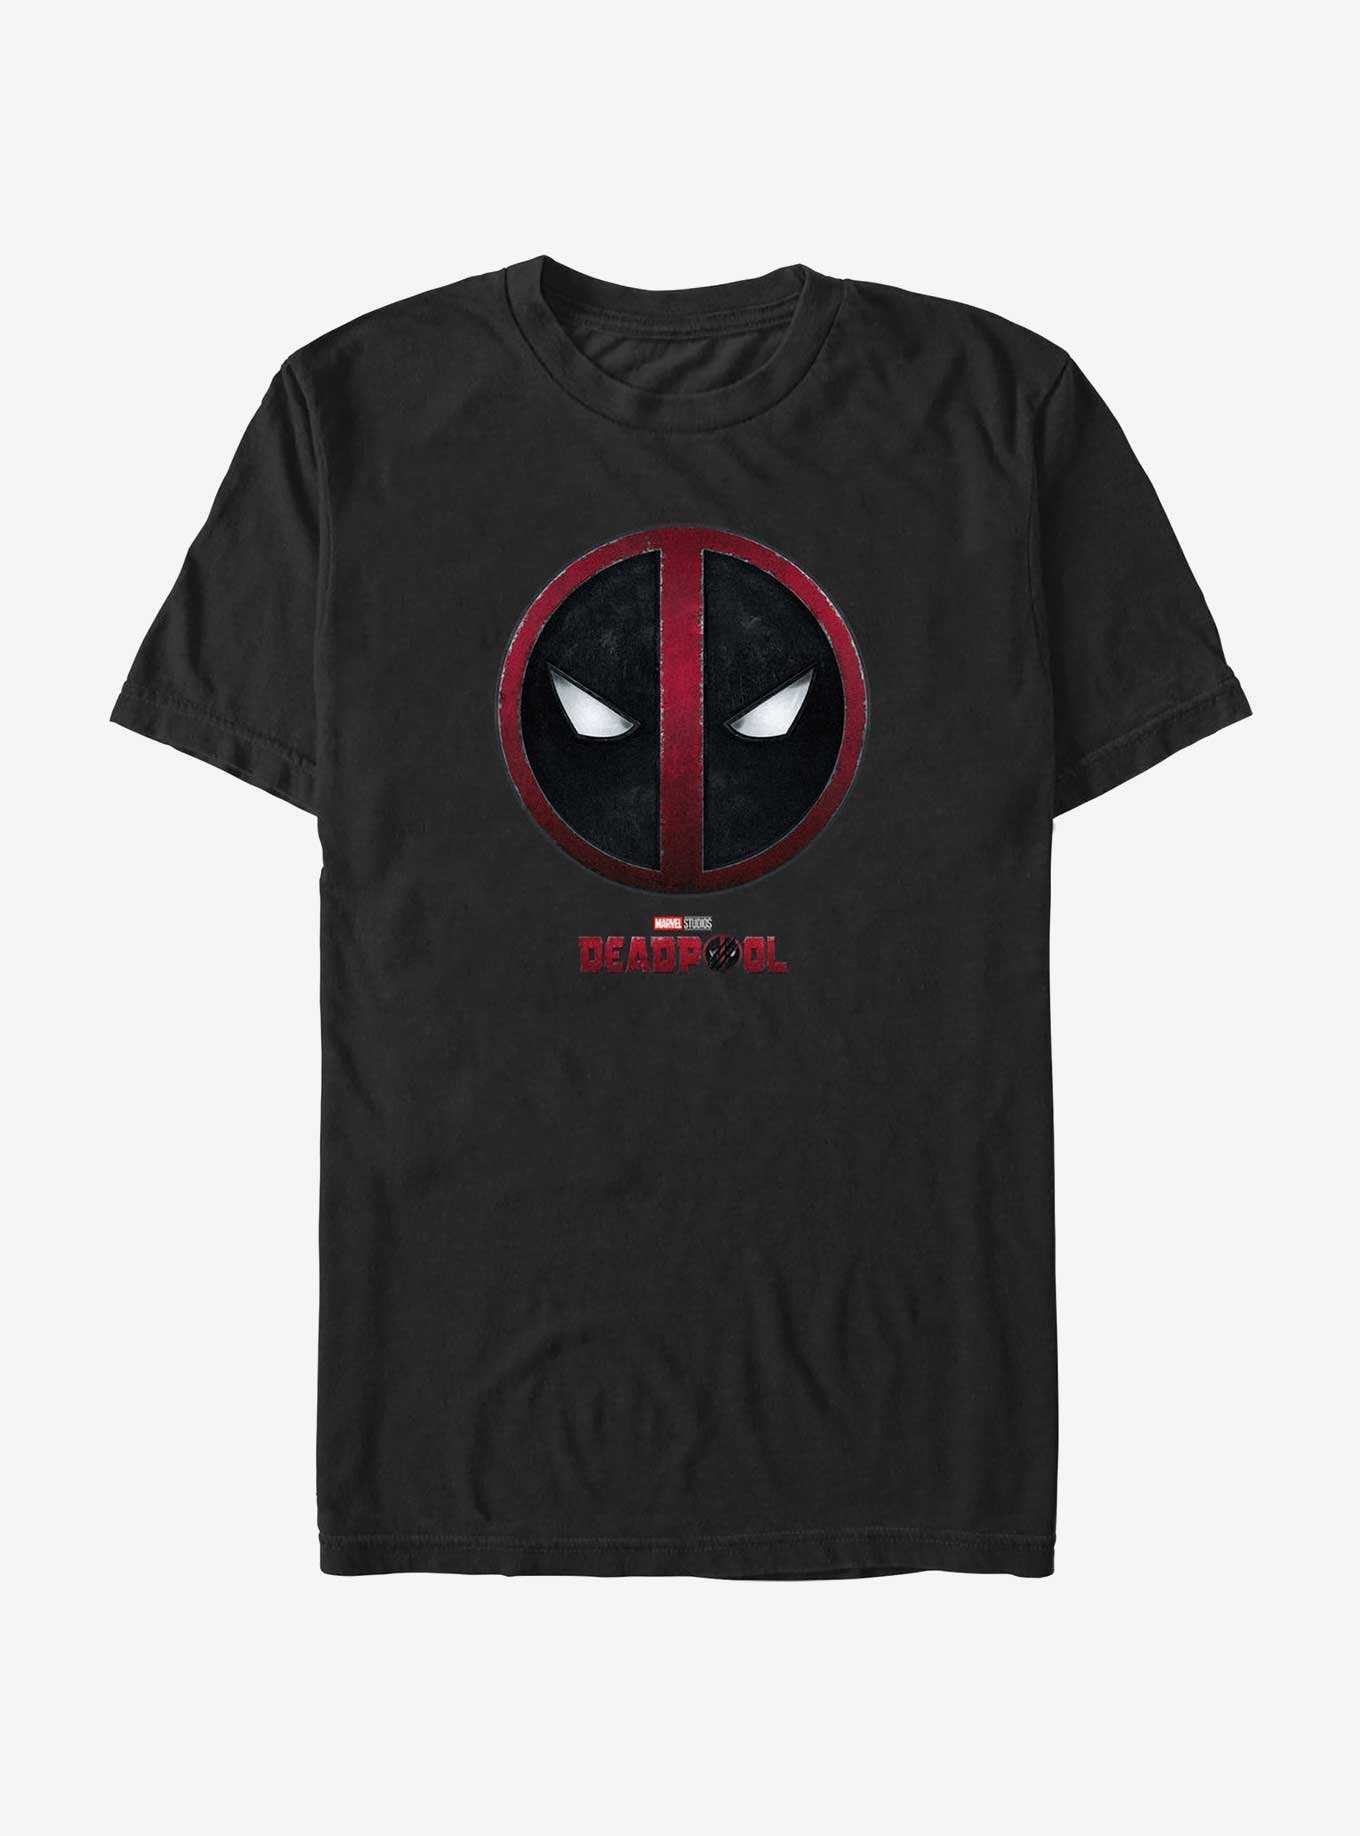 Marvel Deadpool & Wolverine Evil Eye Emblem T-Shirt, , hi-res